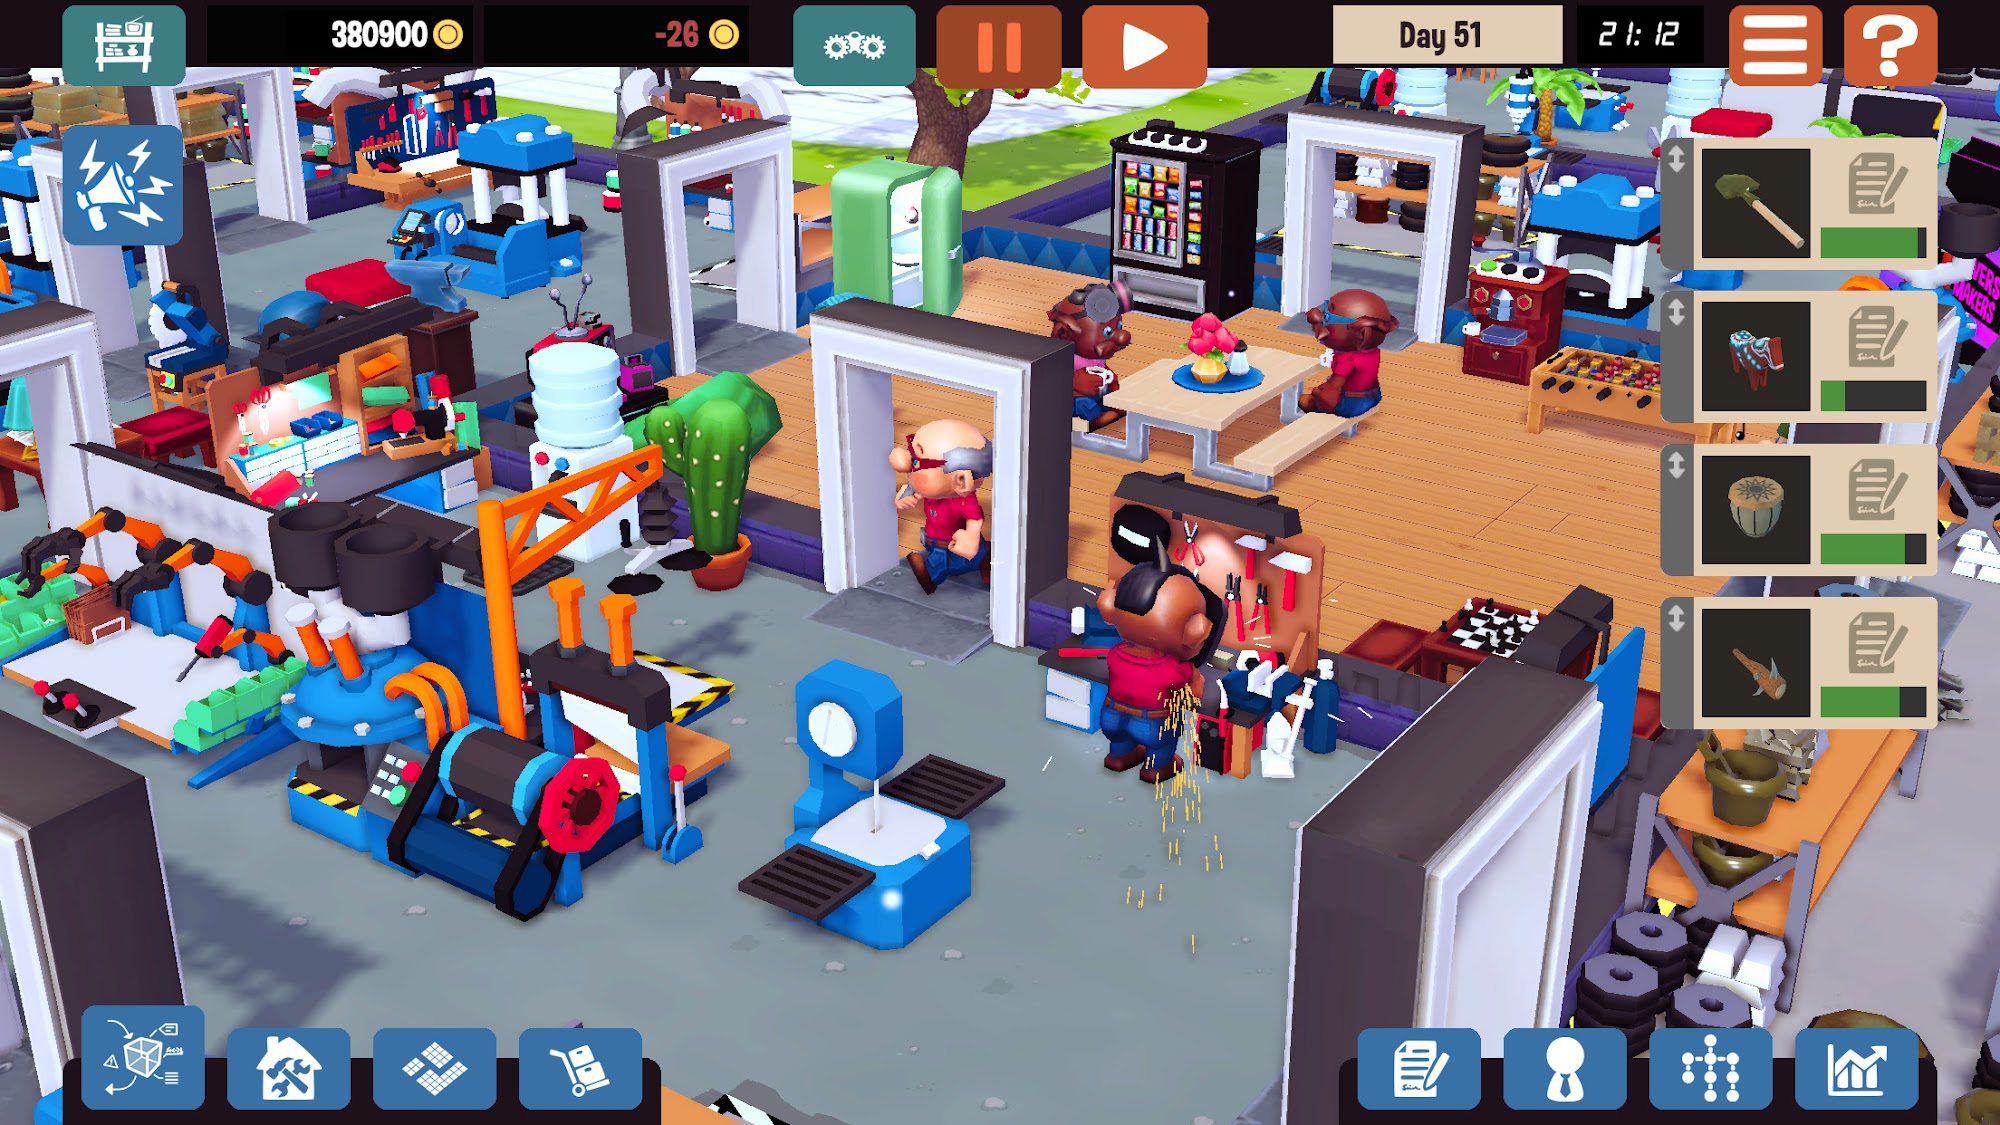 Download Little Big Workshop Android free game.